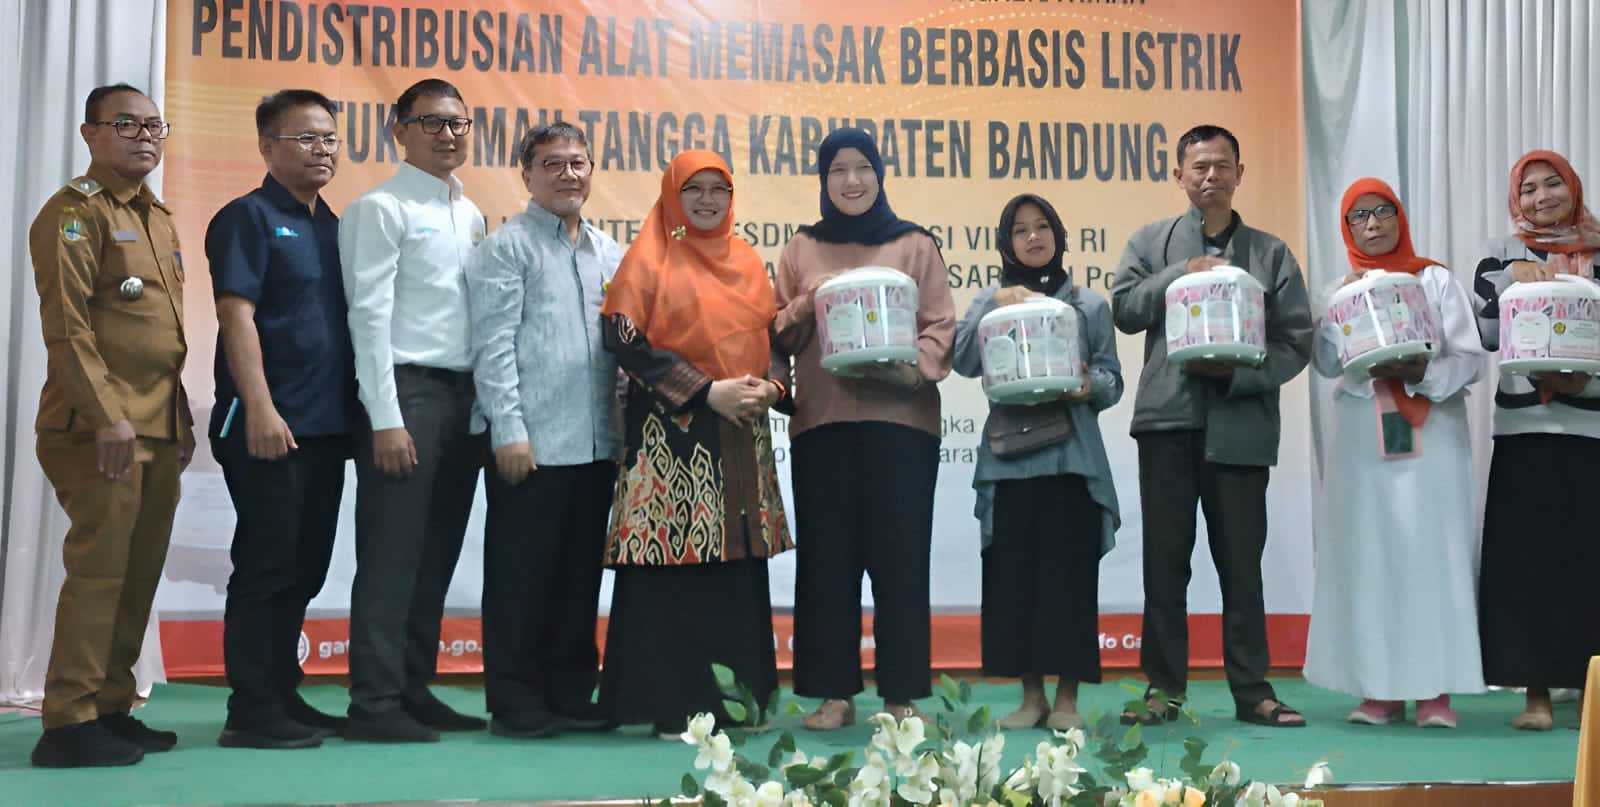 394 KK di Cicalengka Bandung Belum Punya Penanak Nasi, Sejumlah Warga Tersenyum Dapat Bantuan AML